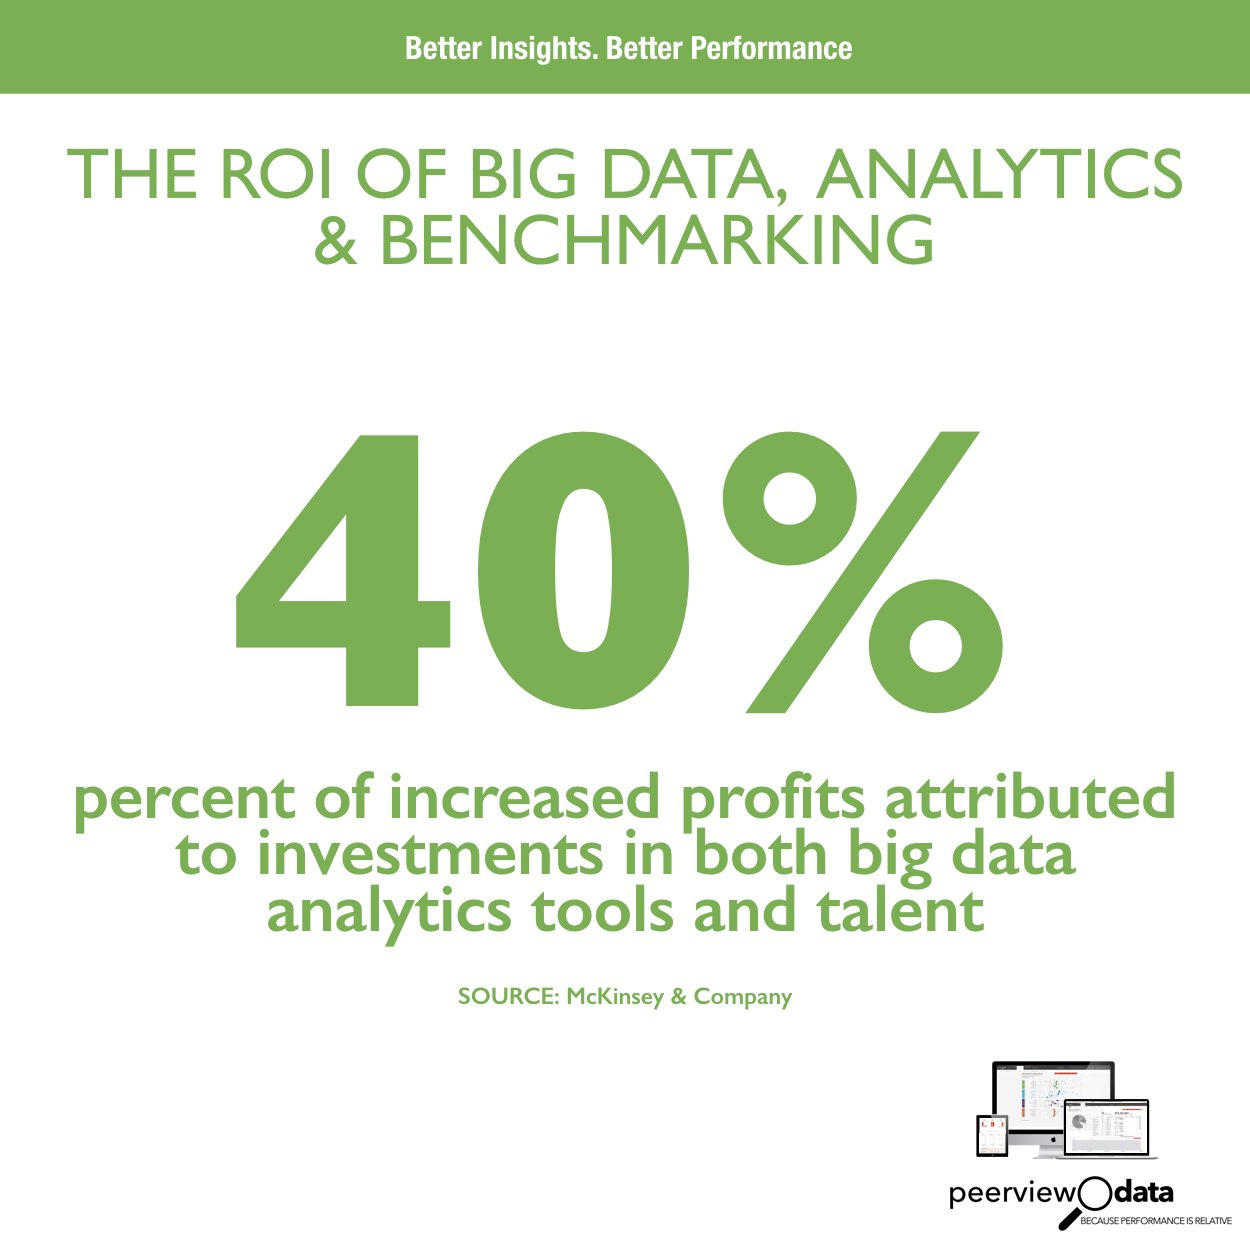 The ROI of Big Data, Analytics & Benchmarking #16